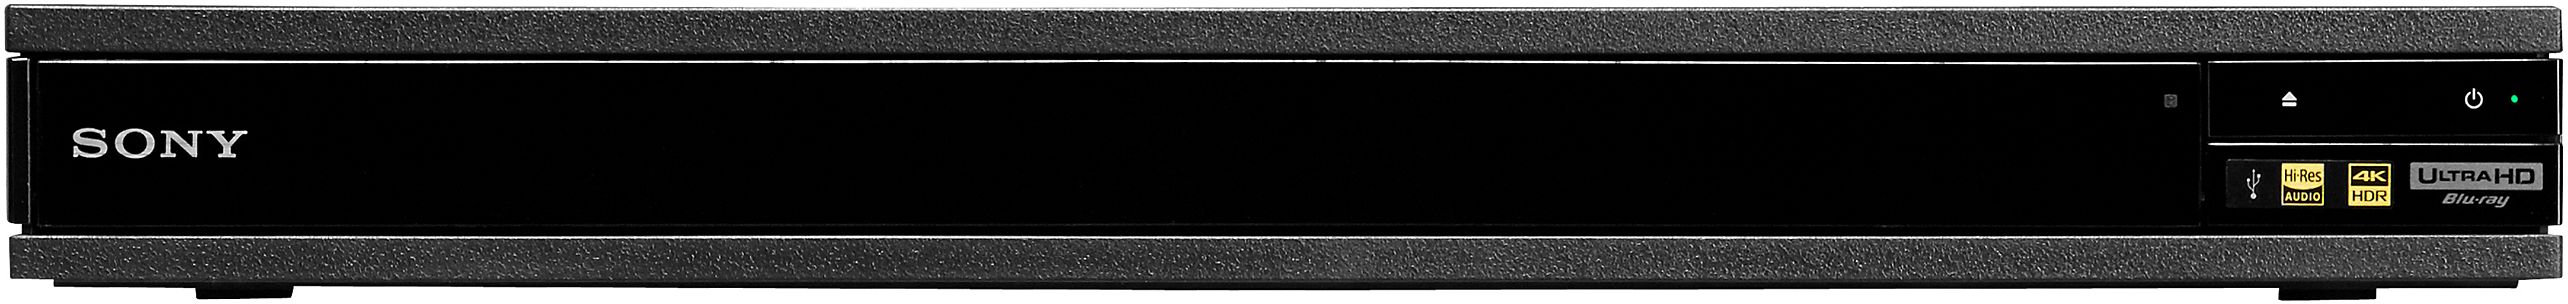 Sony ubp-x800m2 - Lecteurs Blu-ray 